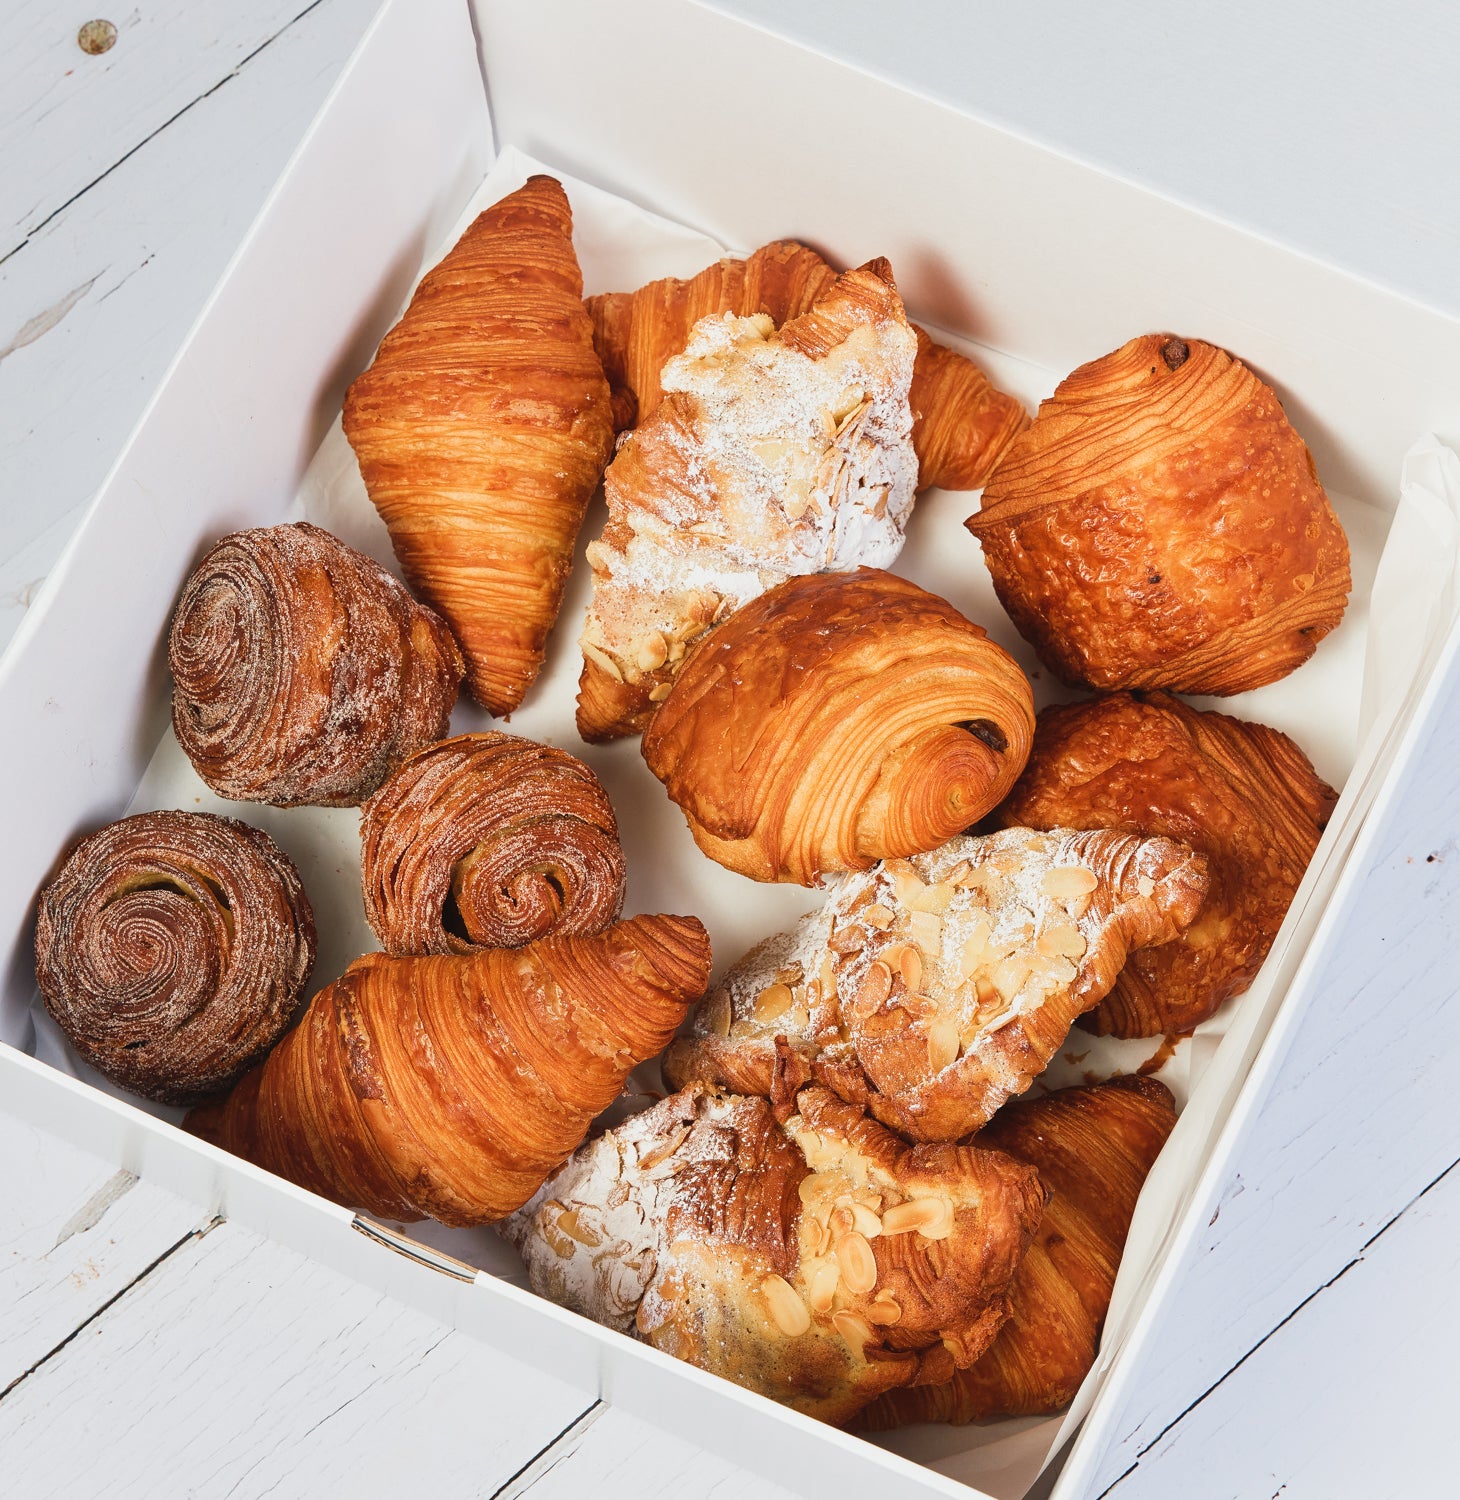 Bakers Dozen Pastry Sharing Box